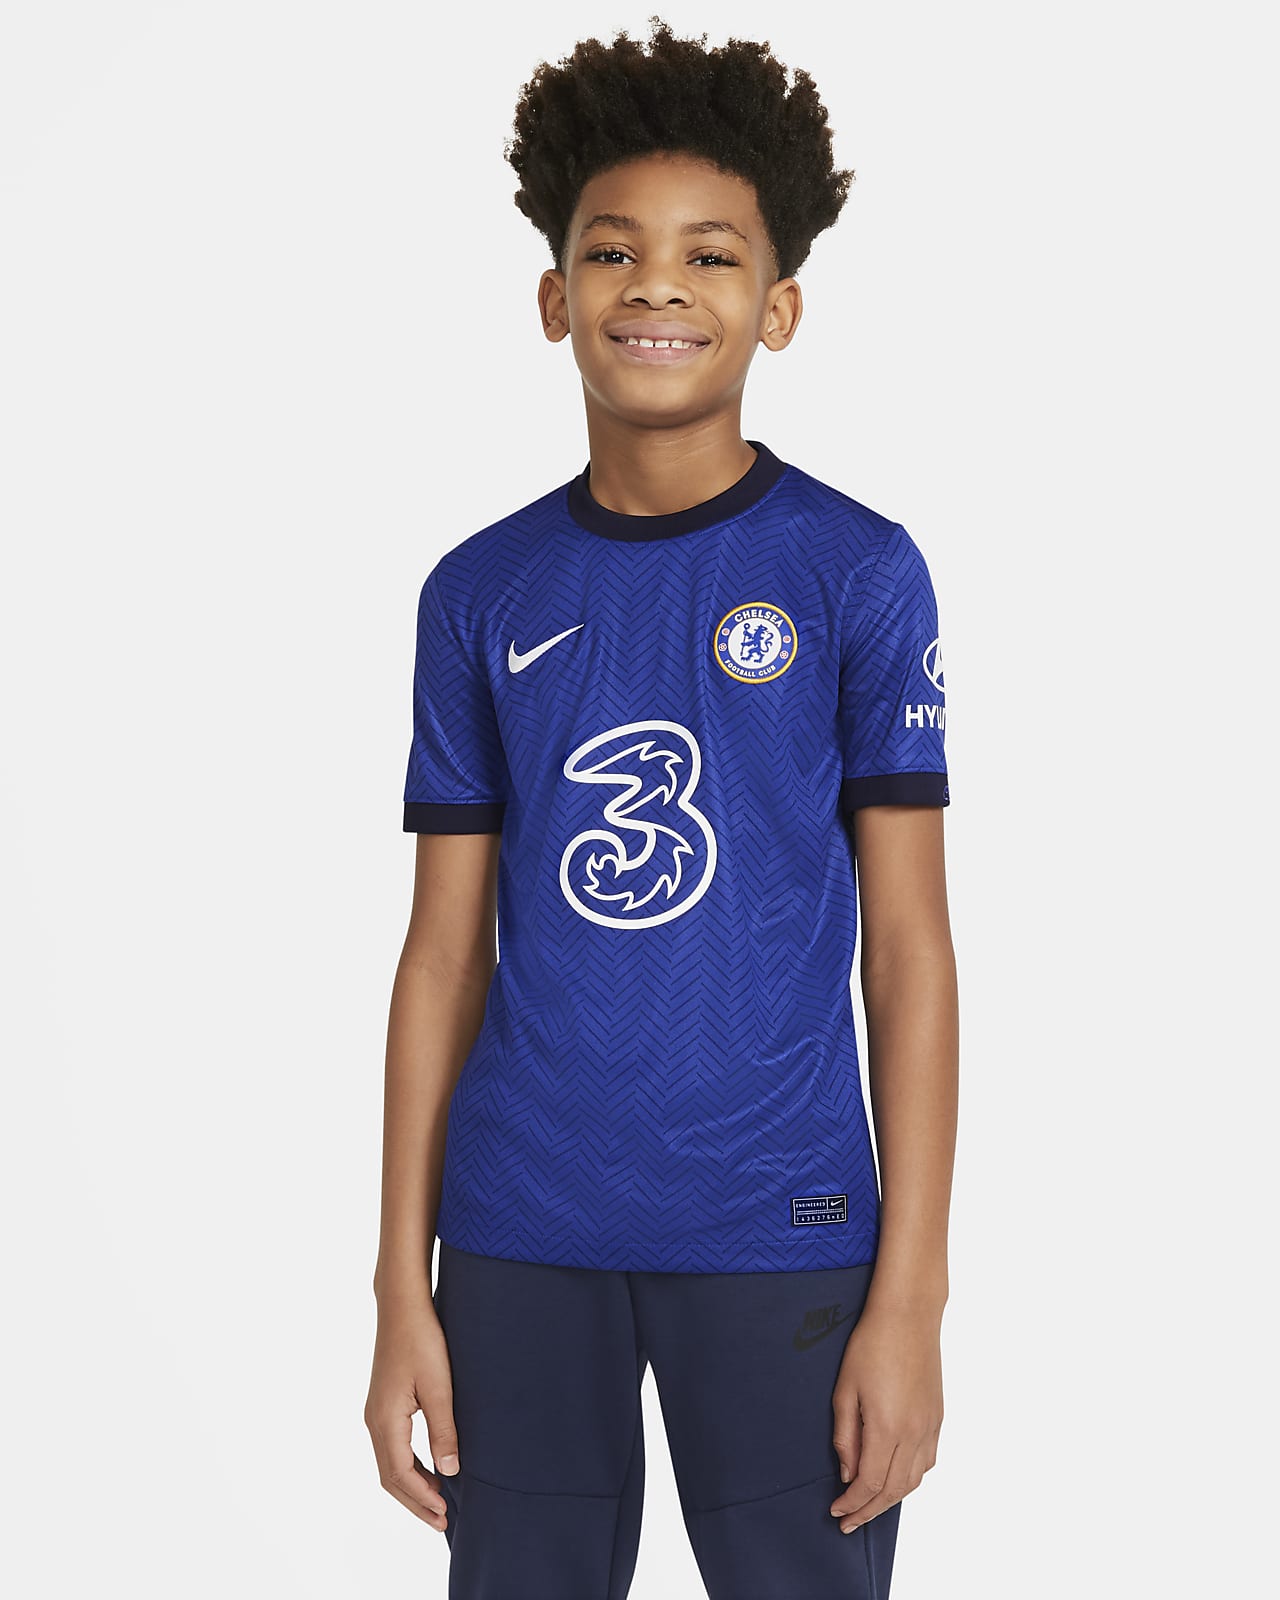 Chelsea Youth T-Shirt Fan Shop Sports & Outdoors kmotors.co.th